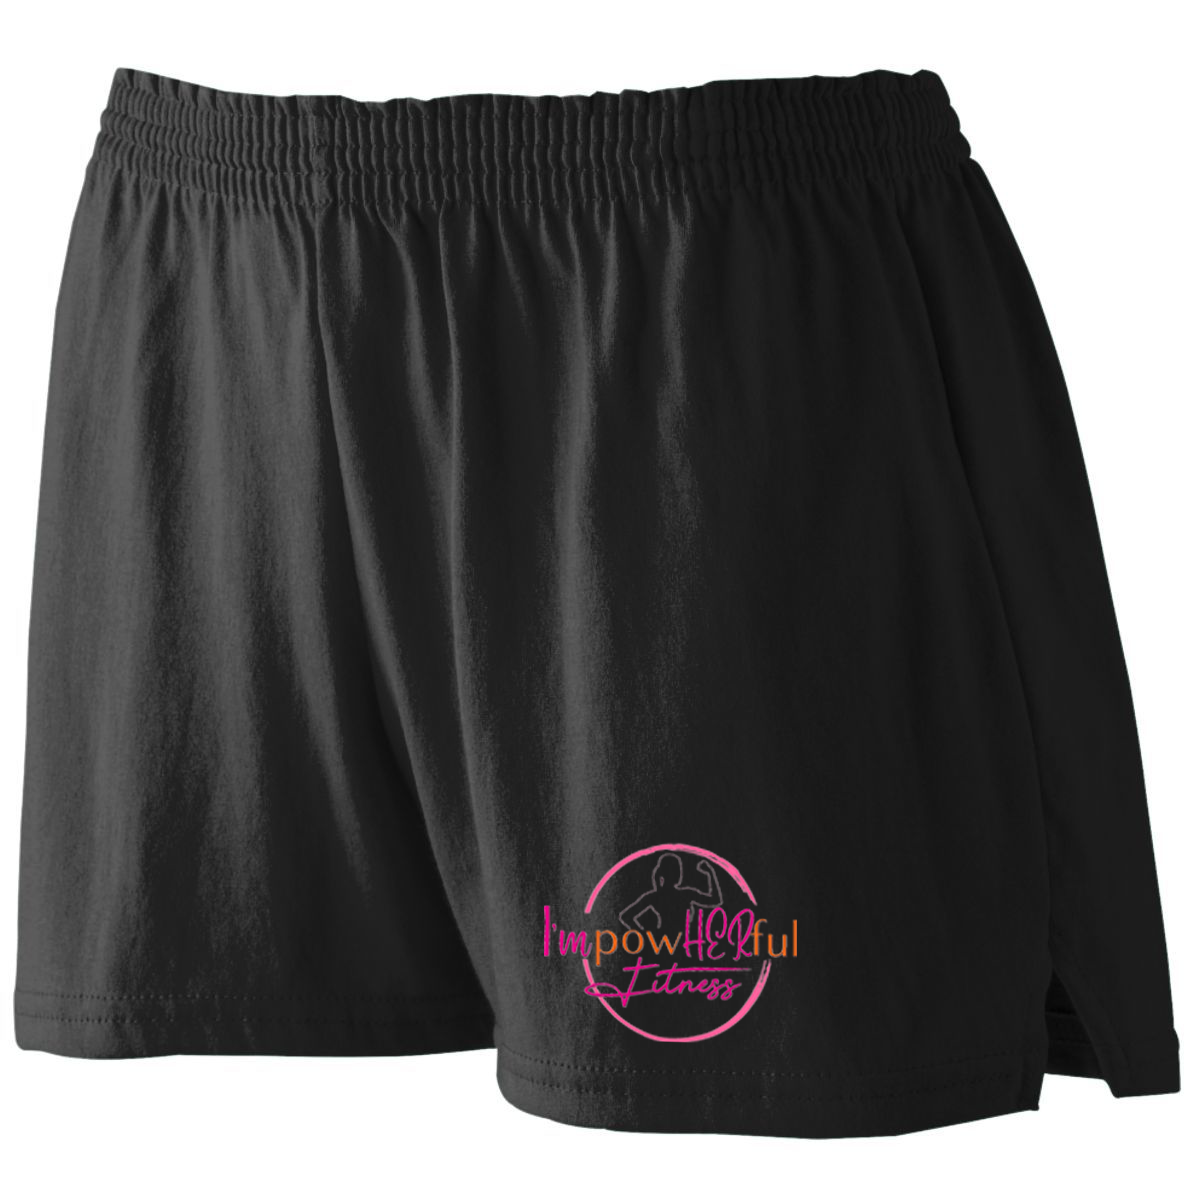 Im powHERful Fitness Women's Jersey Shorts